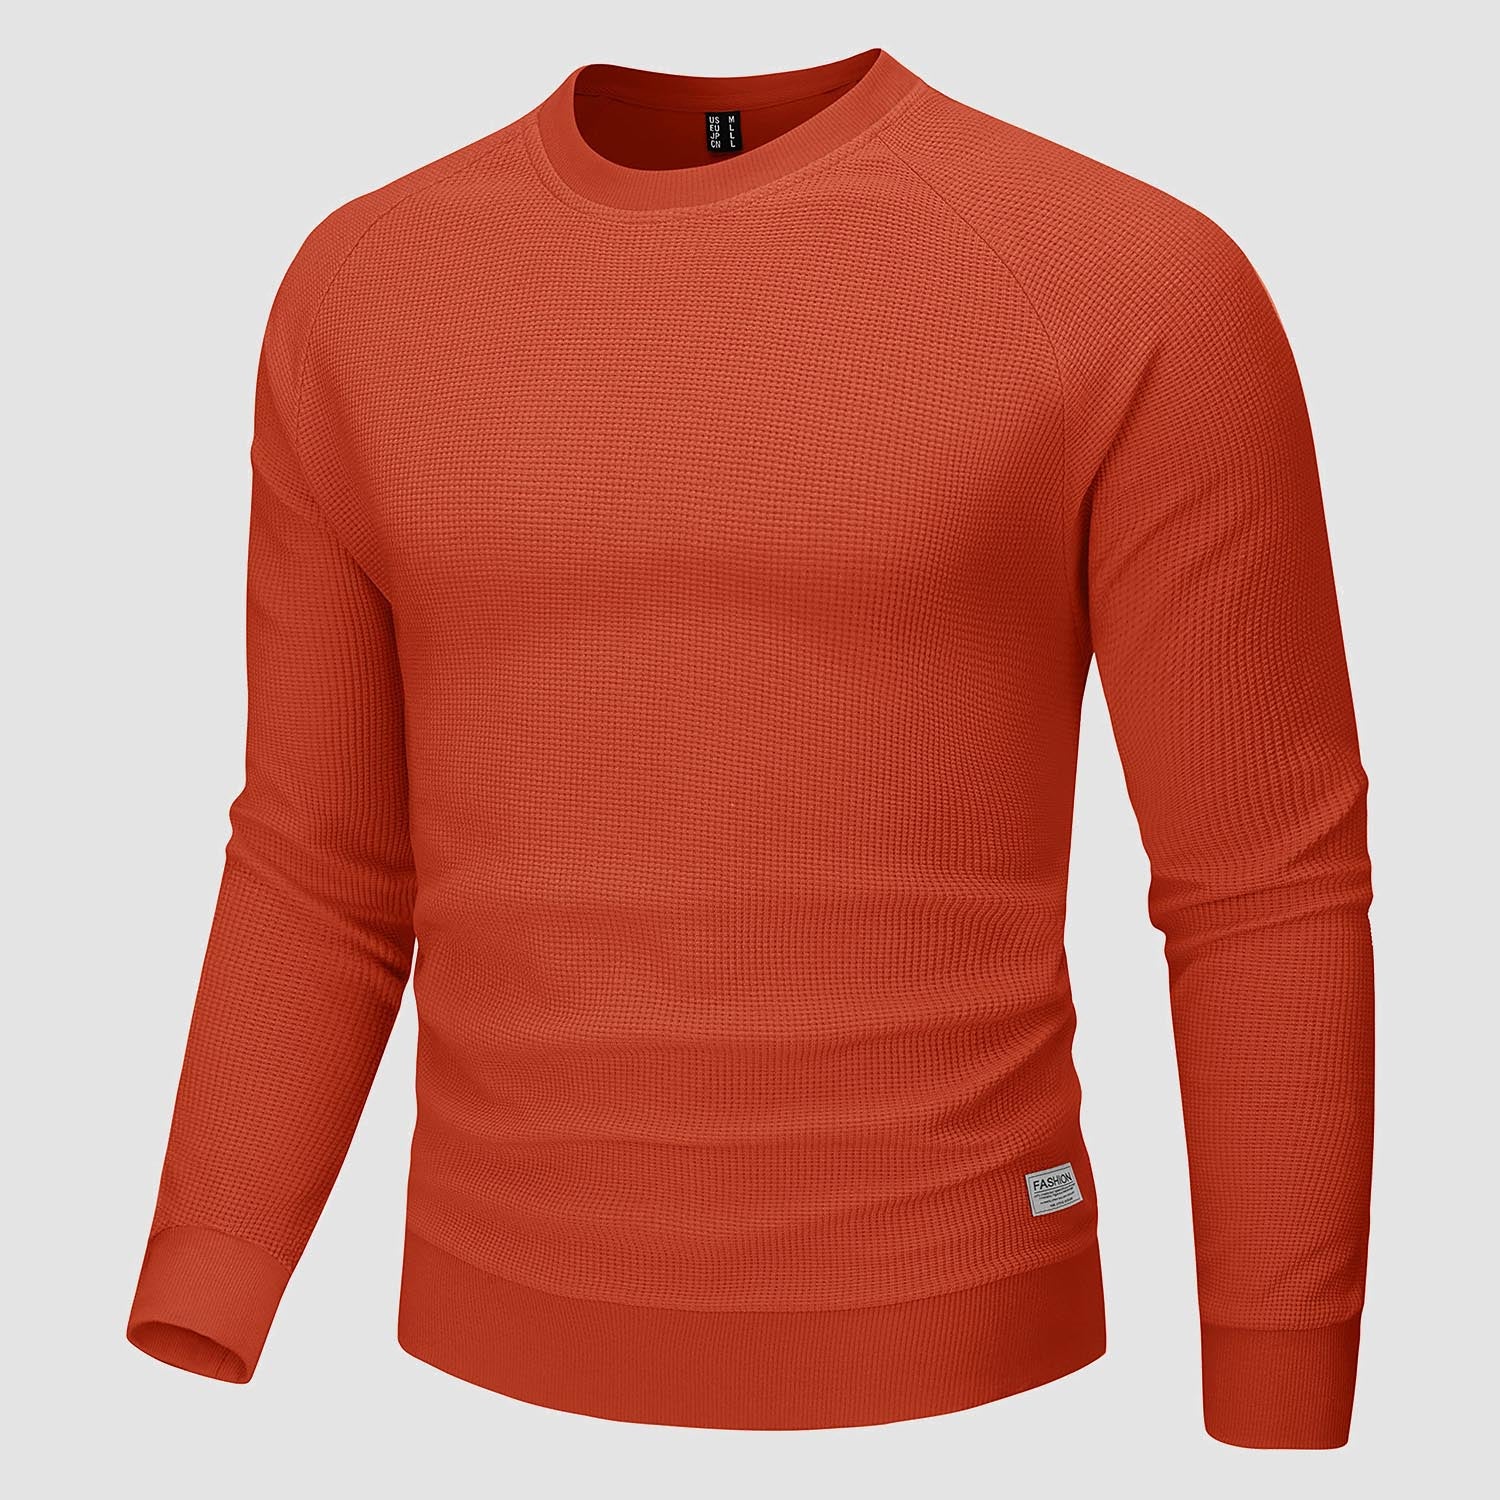 Men's Crewneck Sweatshirts Waffle Knit Pullover Sweater Casual Shirt Lightweight Workout Tops